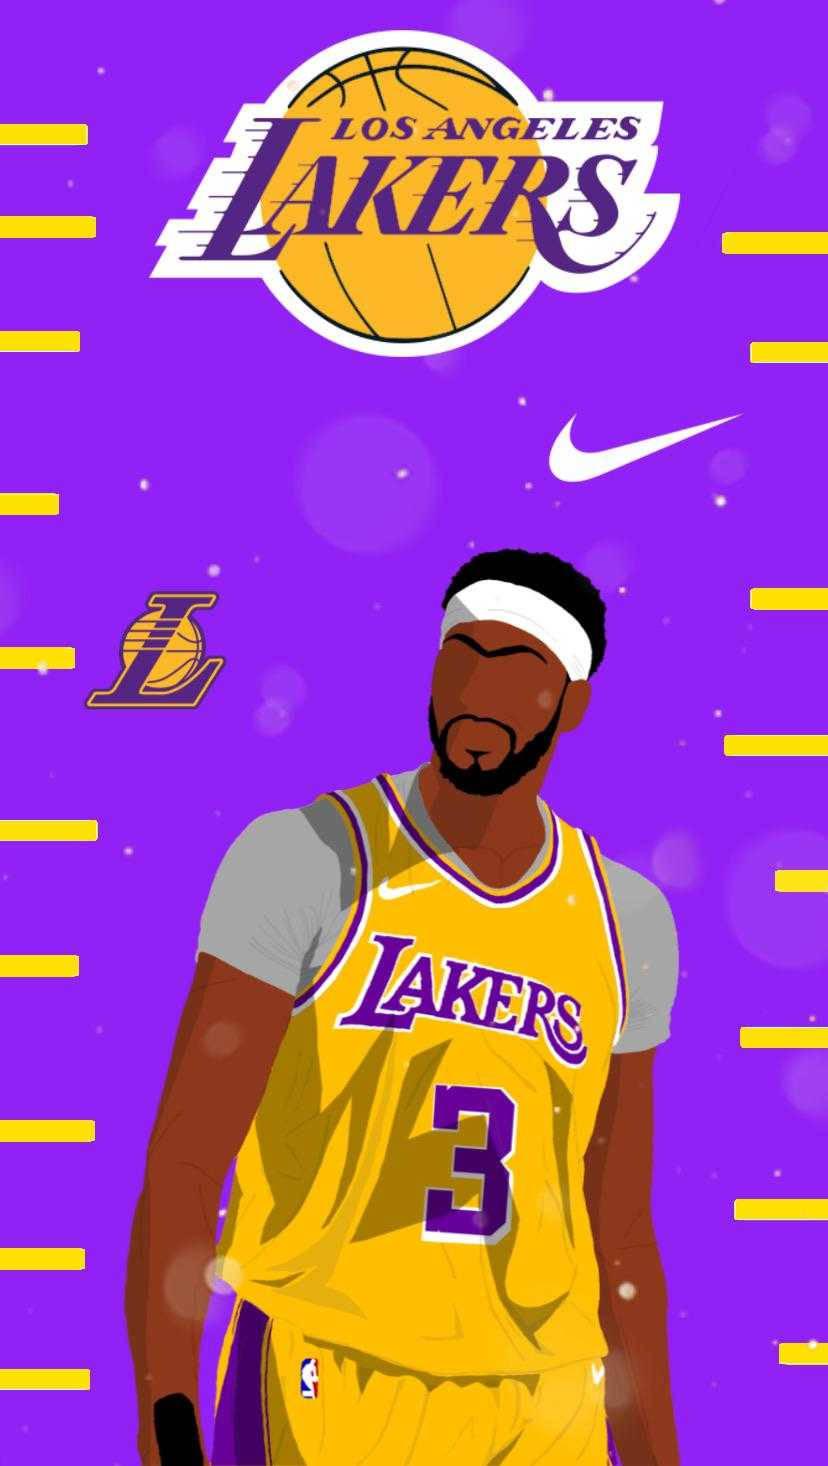 Nyd LA Lakers på din iPhone. Wallpaper